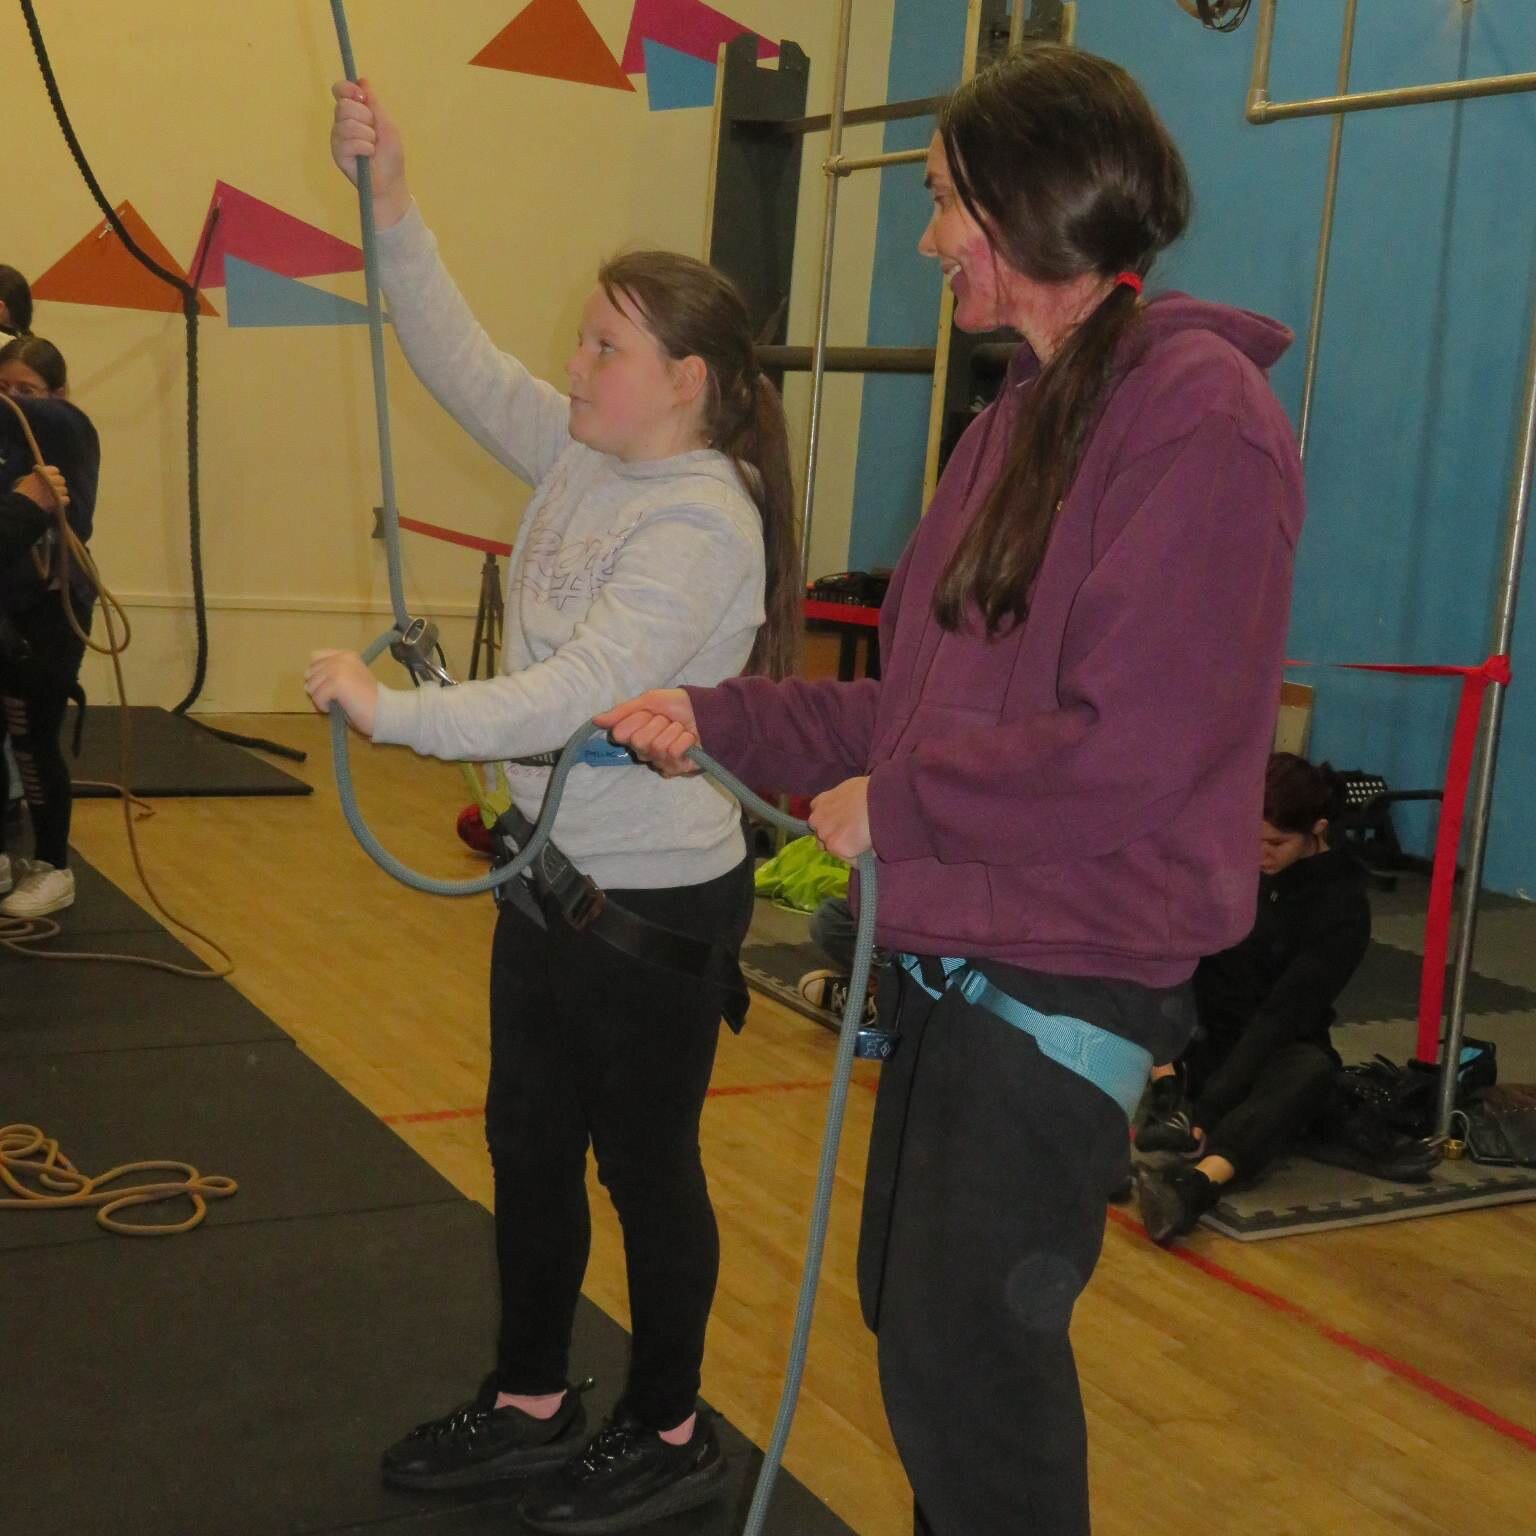 Team work. Learning new skills at Port Talbot Urban Adventure 😀🧗 #notforprofit #climbing #Community